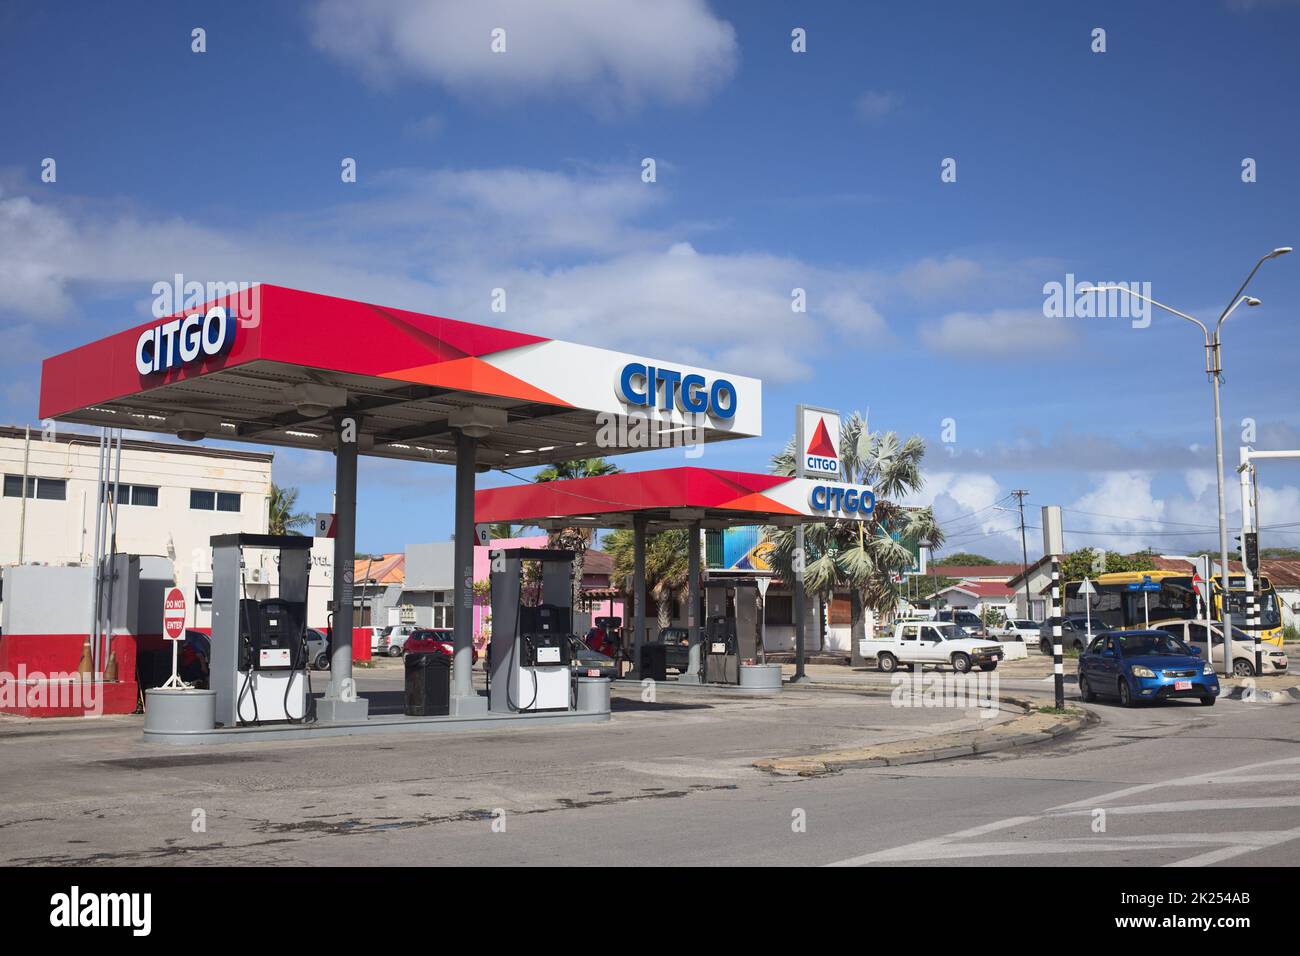 ORANJESTAD, ARUBA - DECEMBER 4, 2021: Citgo Caya Grandi gas station at the corner of Caya G. F. Betico Croes and Adriaan Lacle Boulevard in Oranjestad Stock Photo